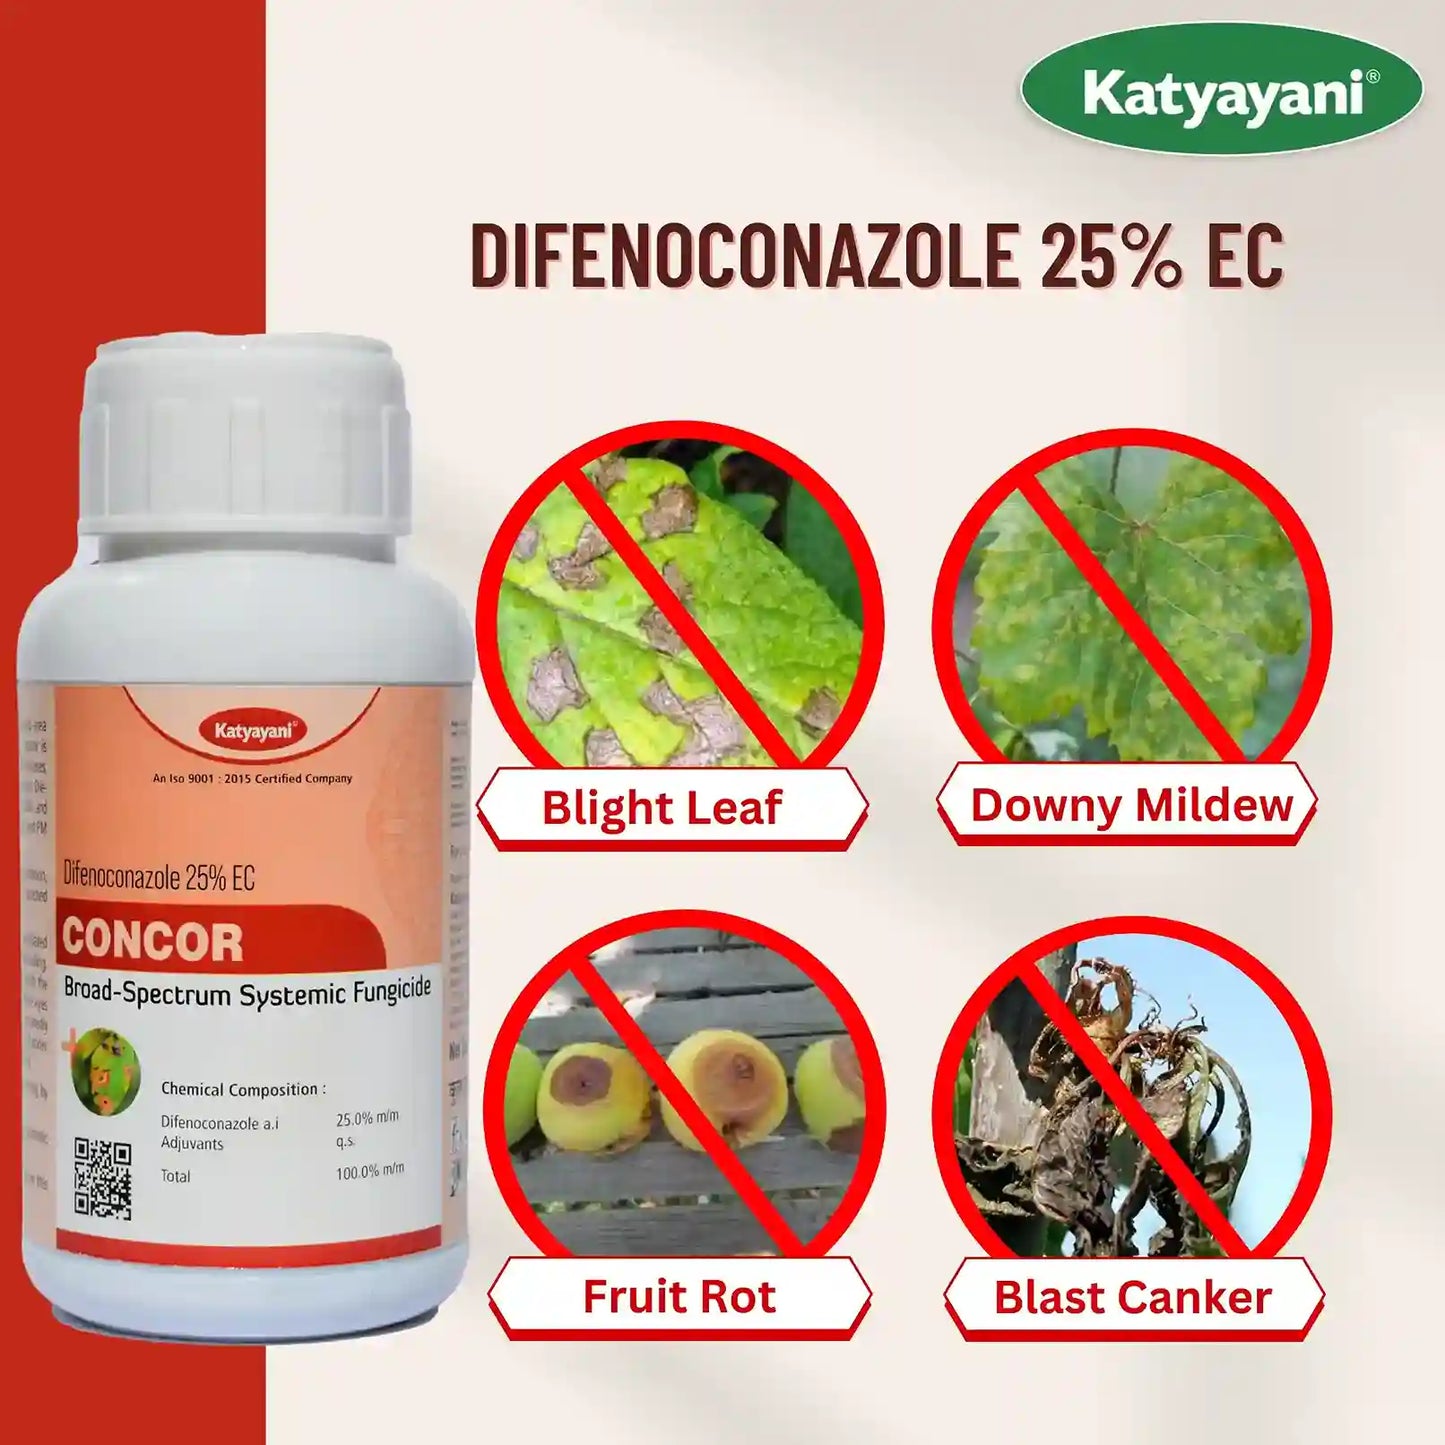 Difenconazole 25% EC-CONCOR